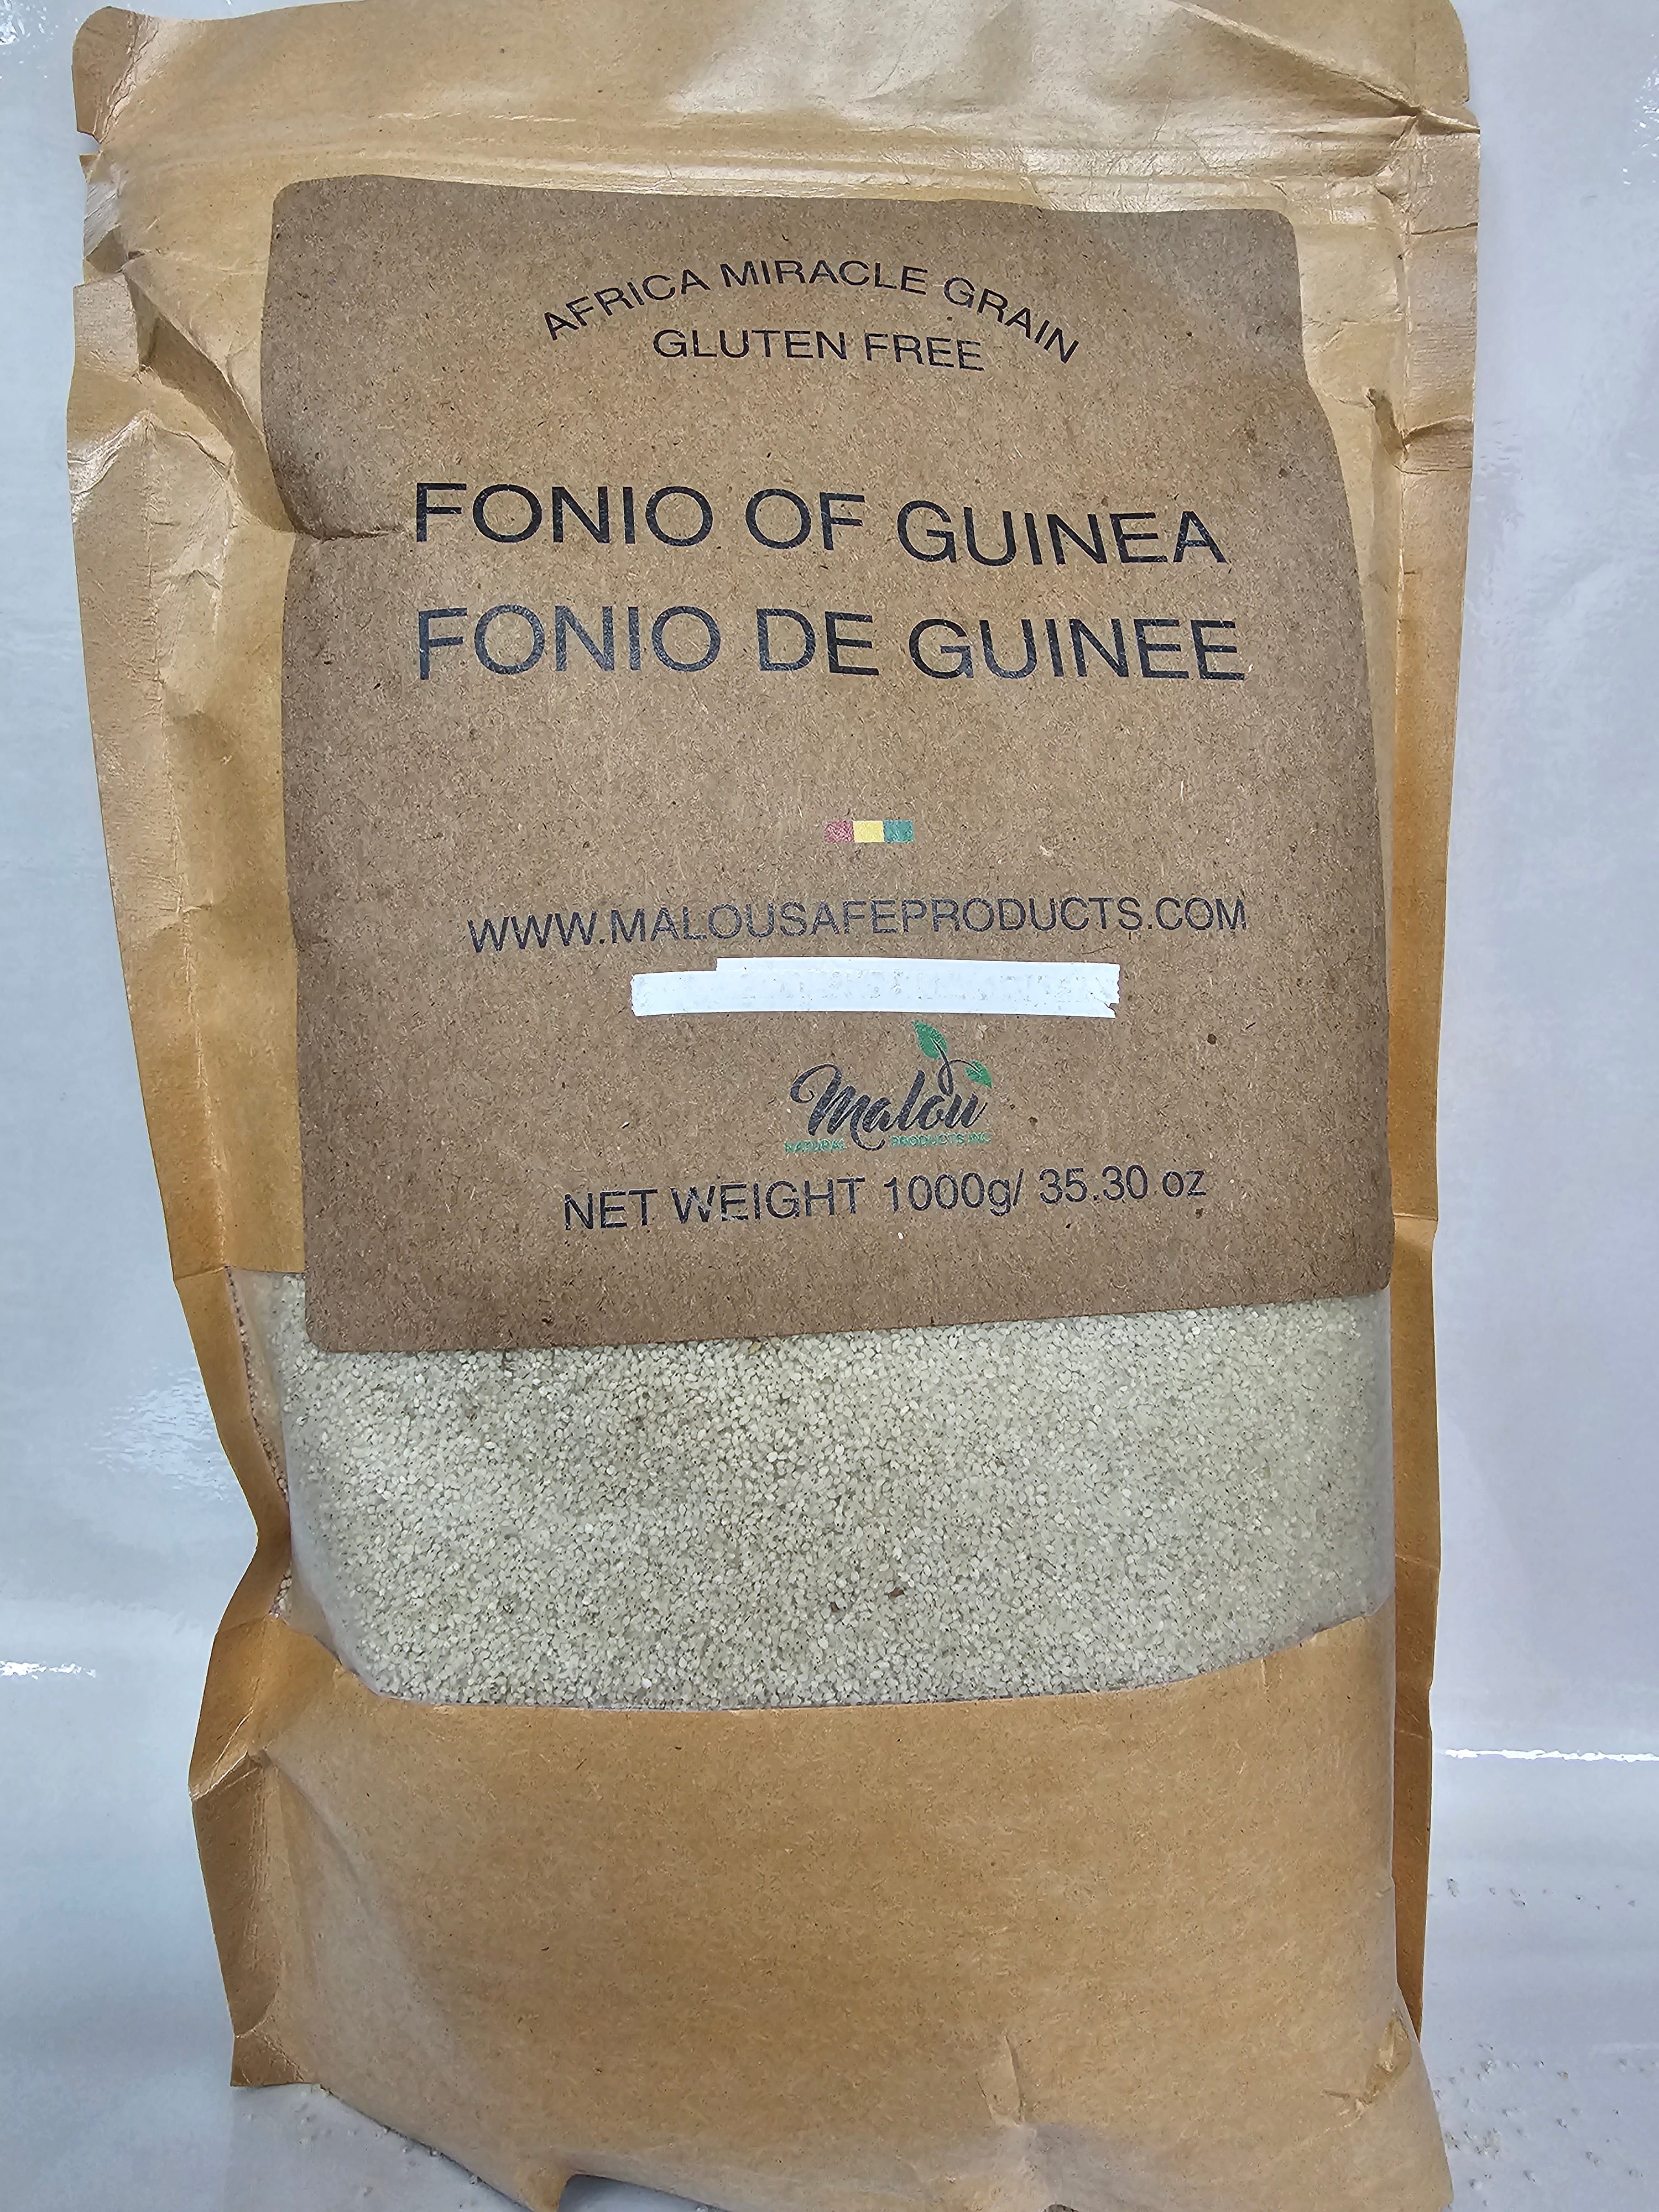 Fonio ( African miracle Grain